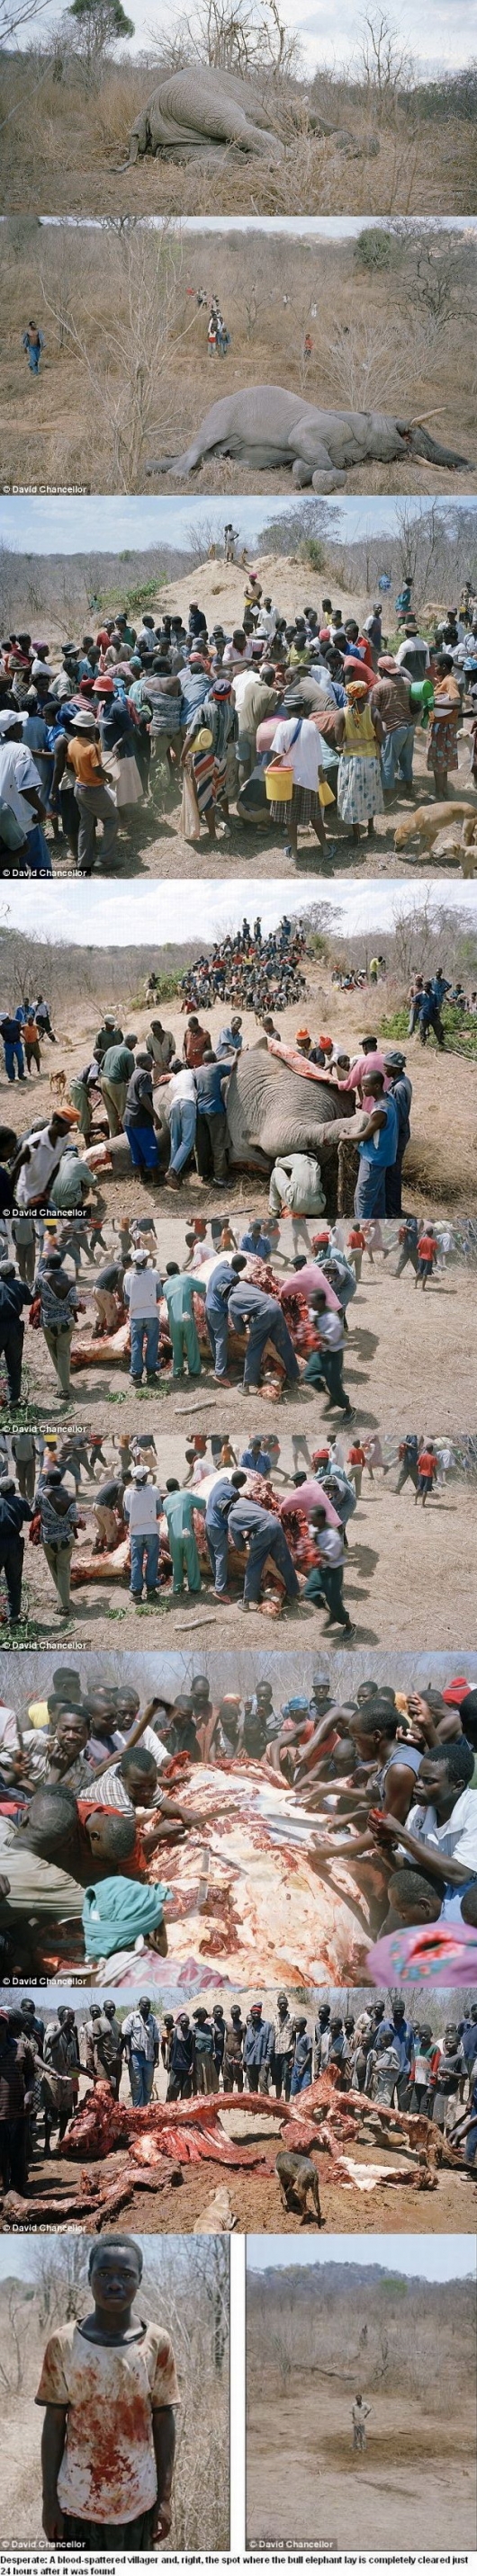 Villagers strip down elephant